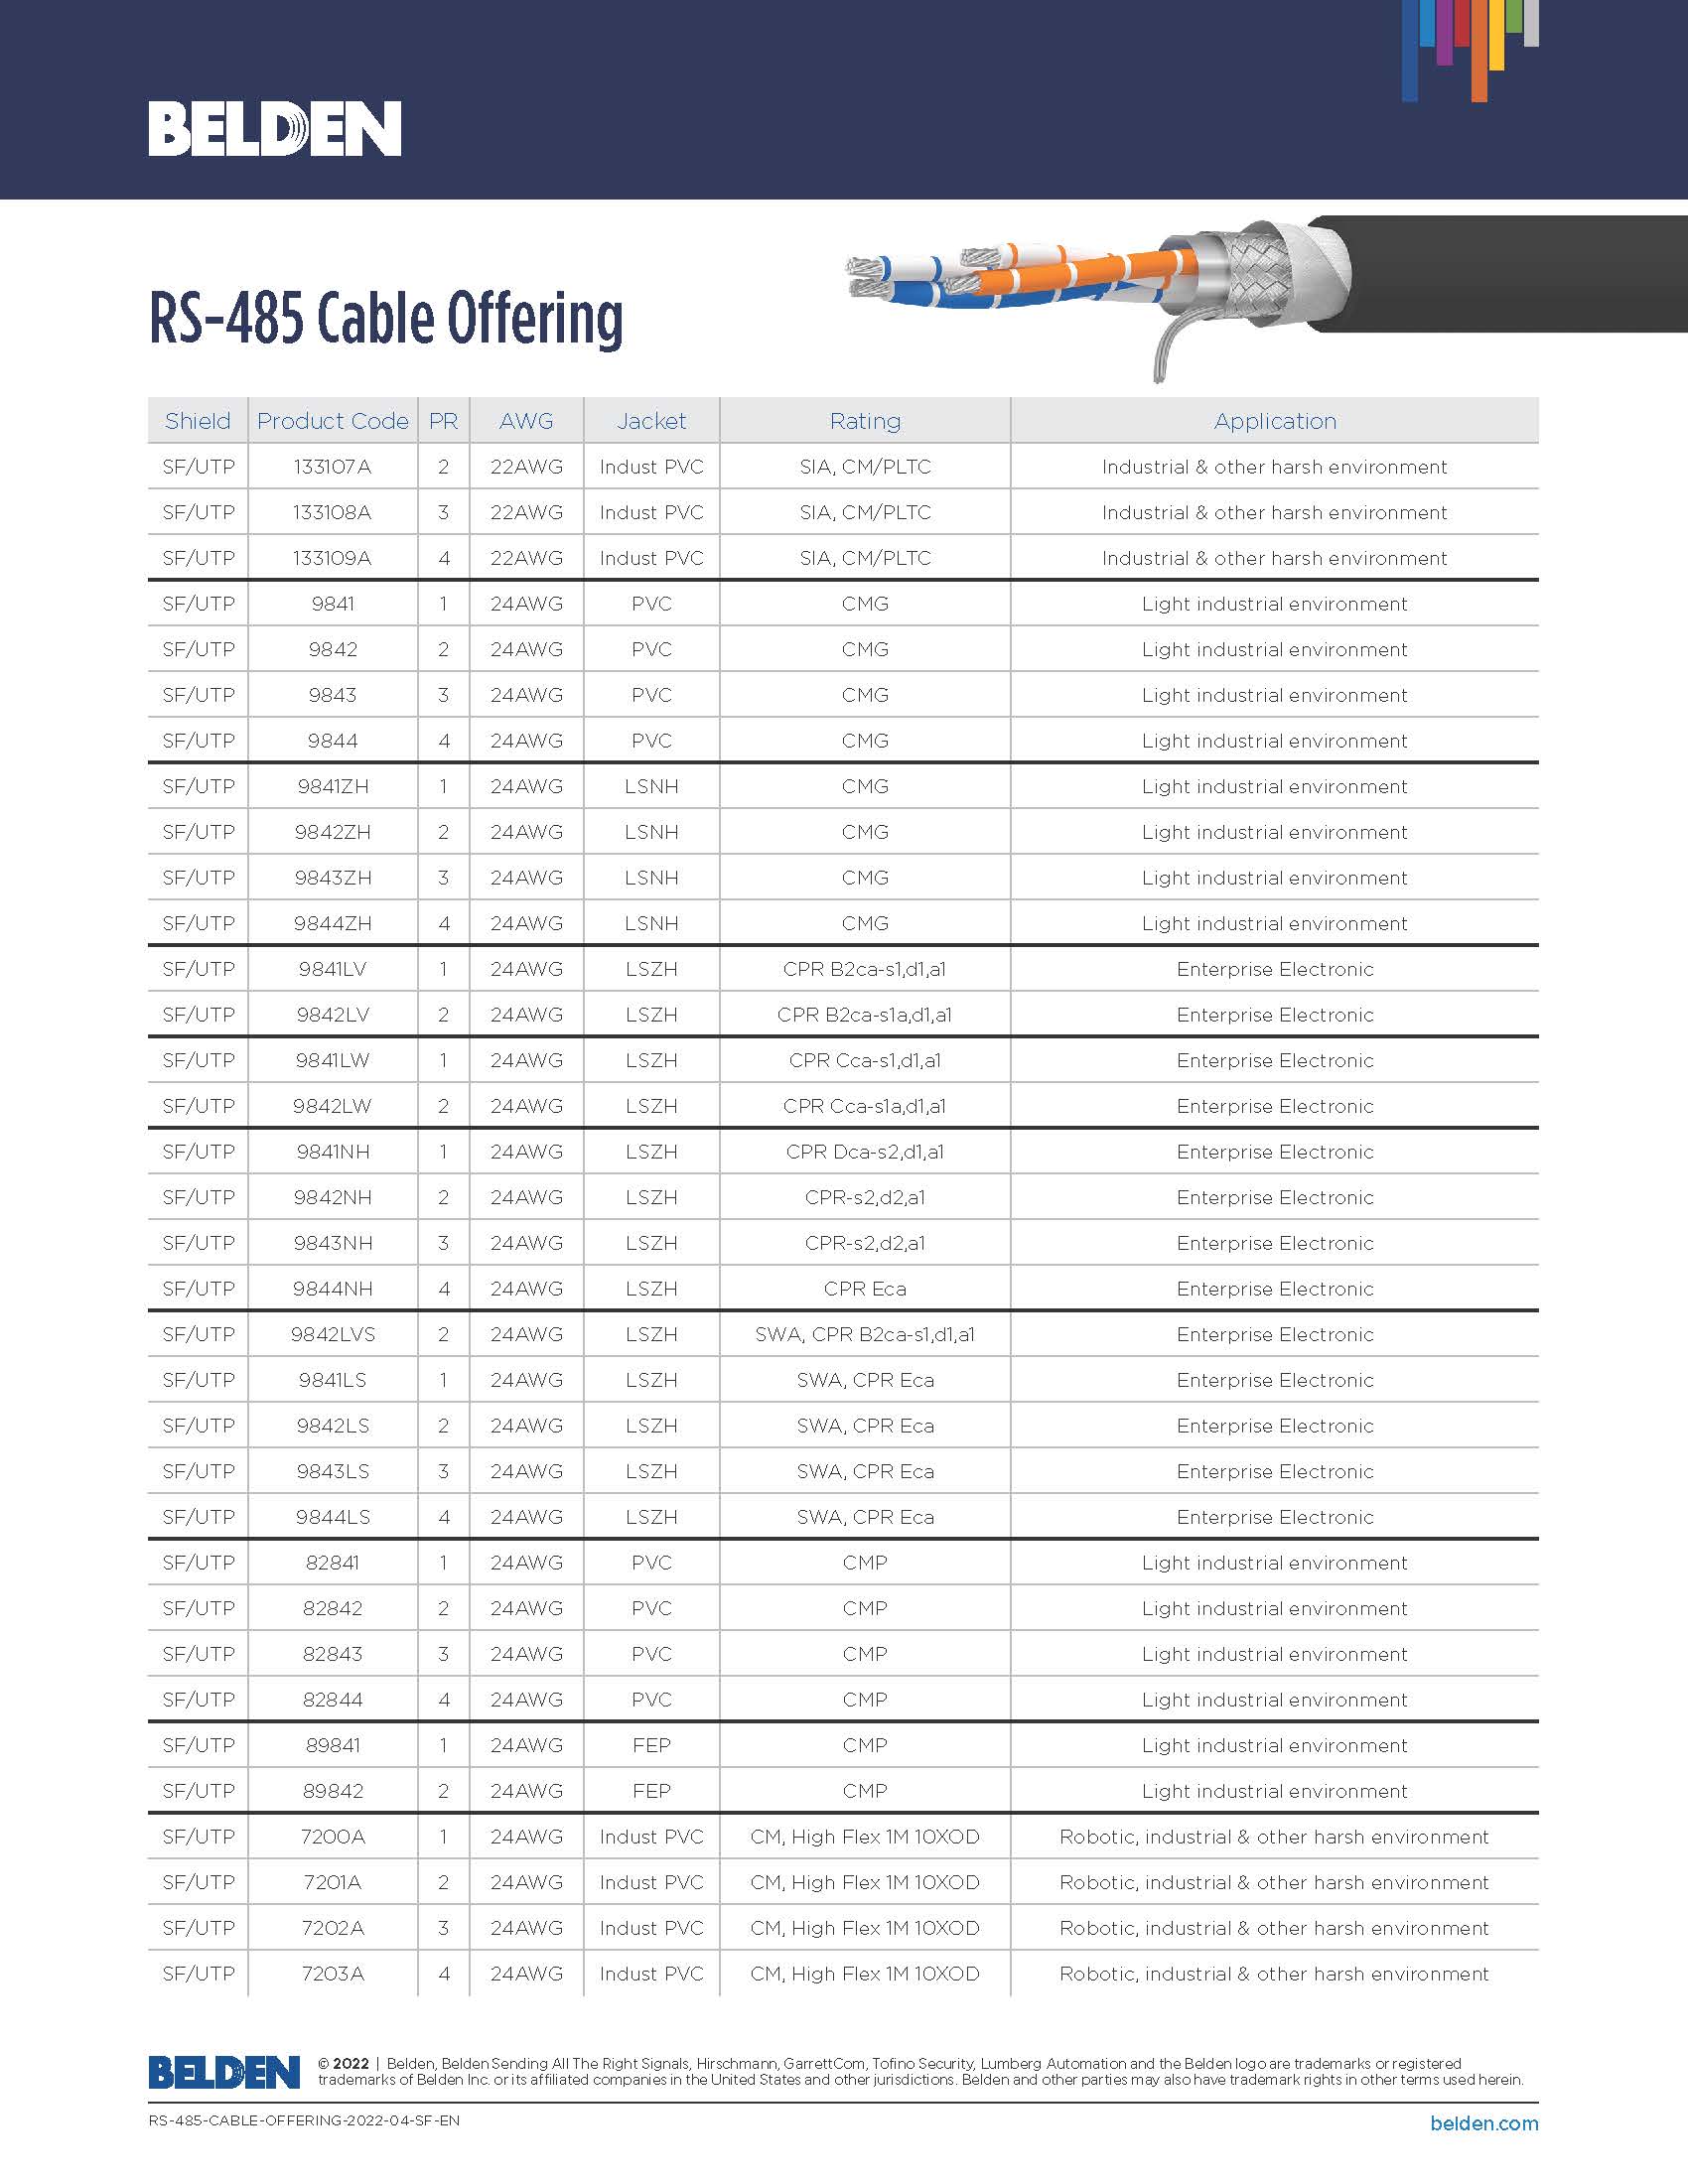 BELDEN RS-485 Cable 자료 1